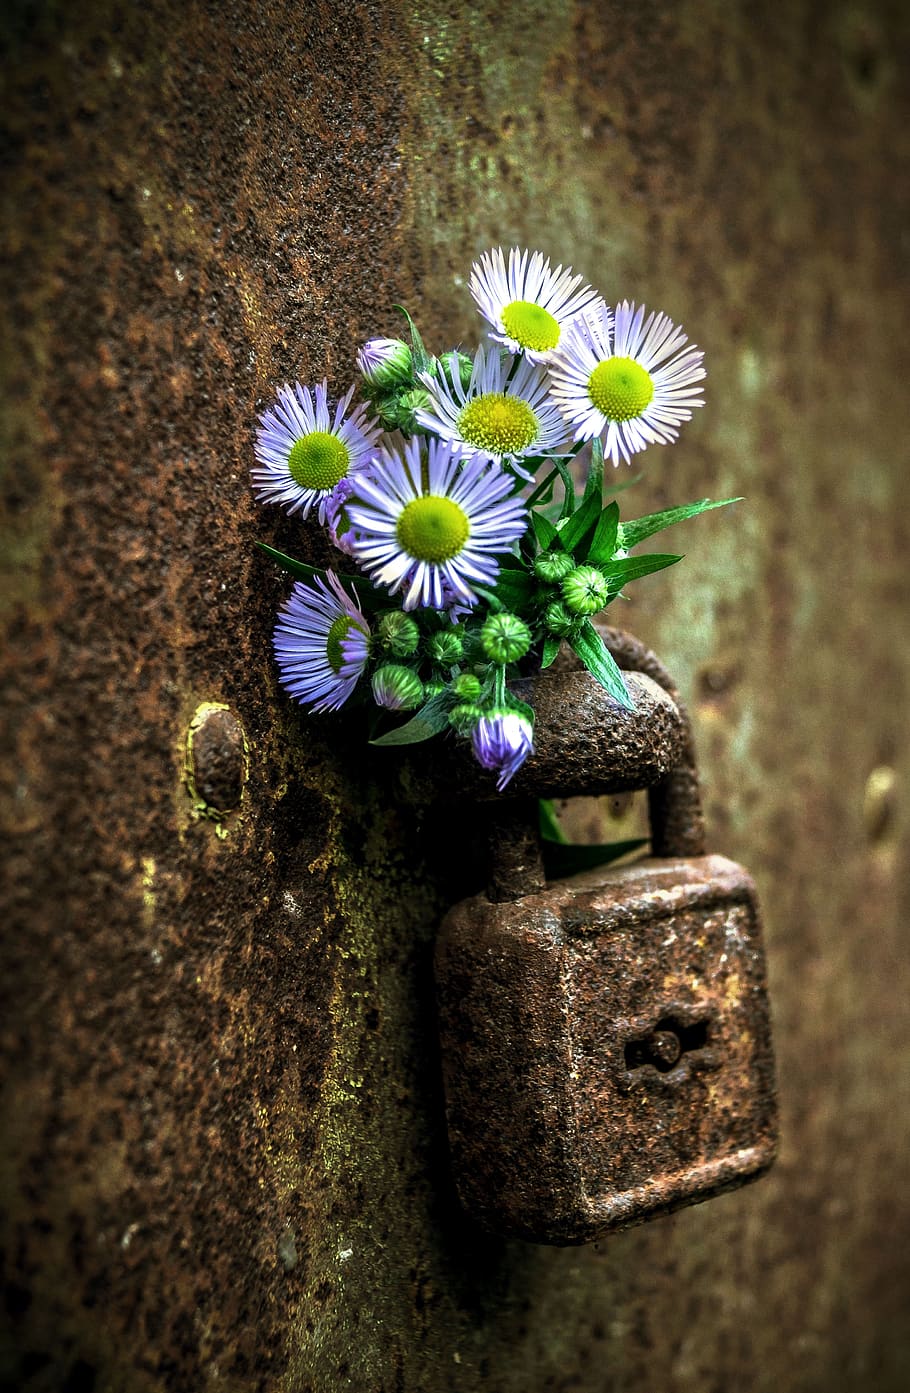 padlock, still life, old, metal, door, rust, flower, flowering plant